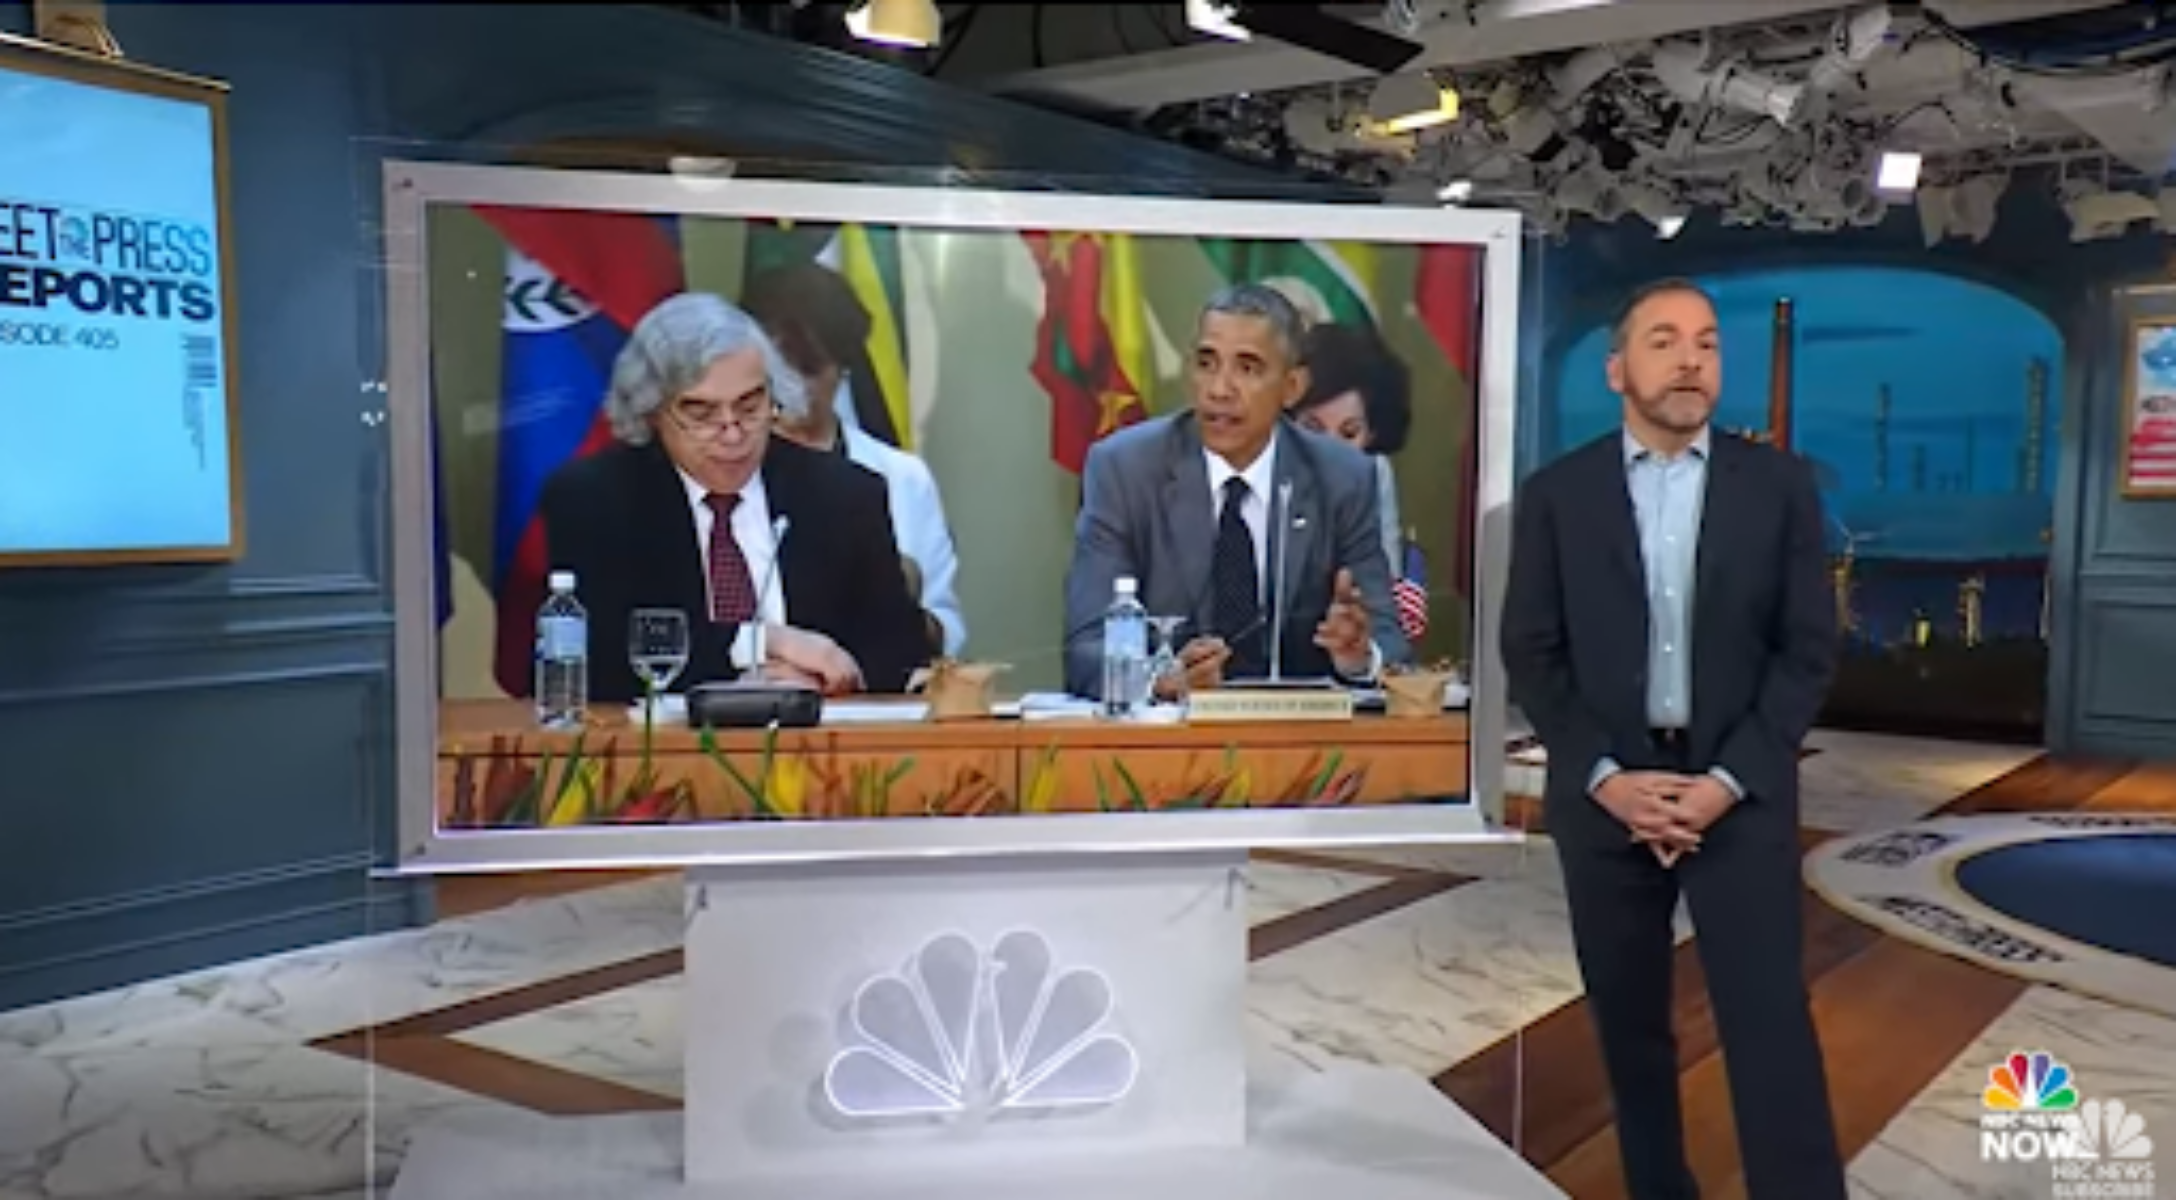 Video Capture of Ernest Moniz and former President Barack Obama with Chuck Todd